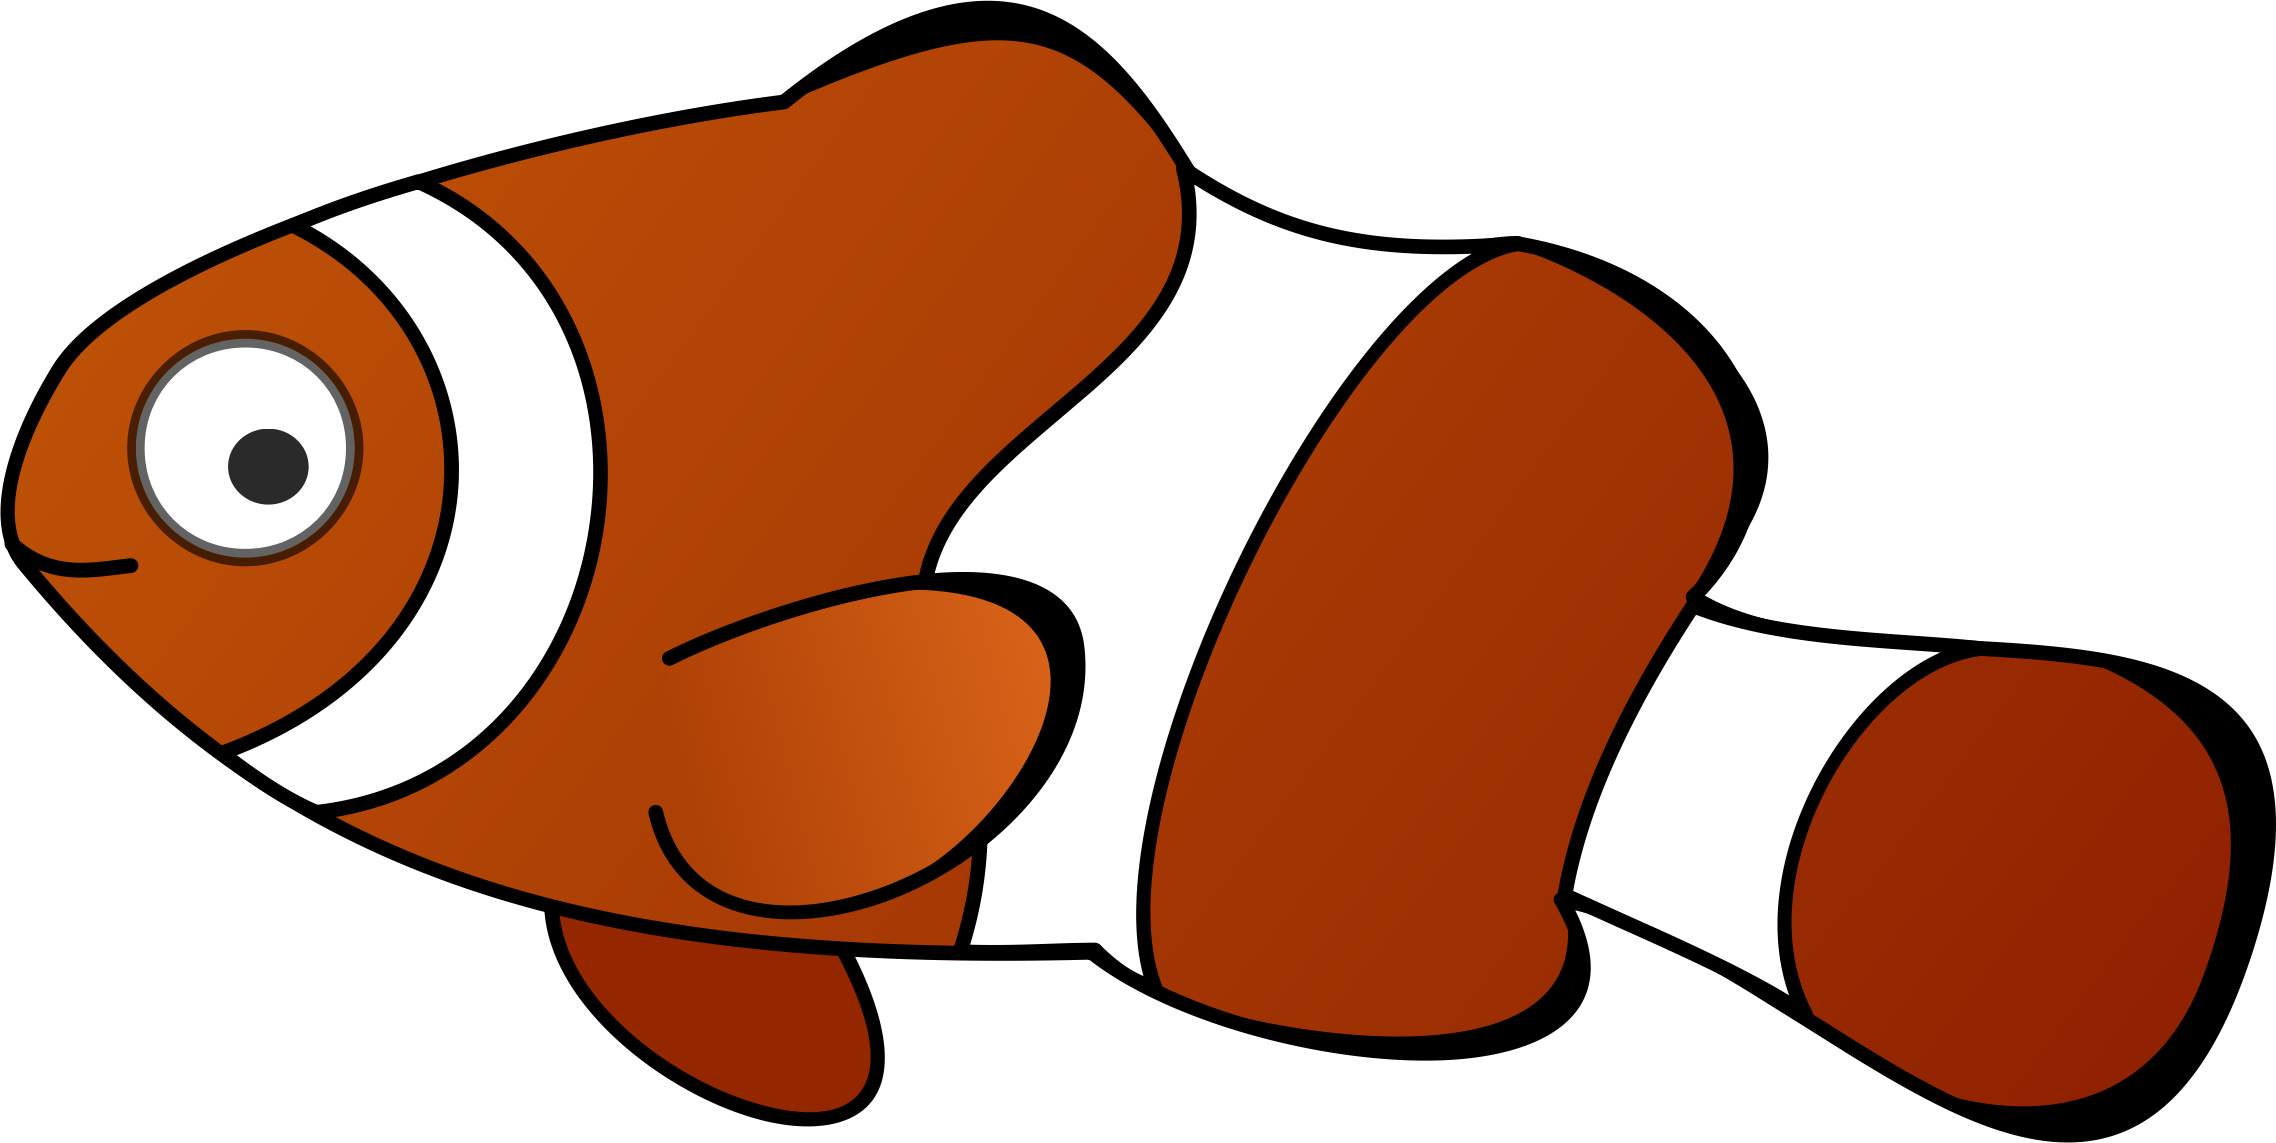 Download Clownfish Cartoon vector clipart image - Free stock photo - Public Domain photo - CC0 Images